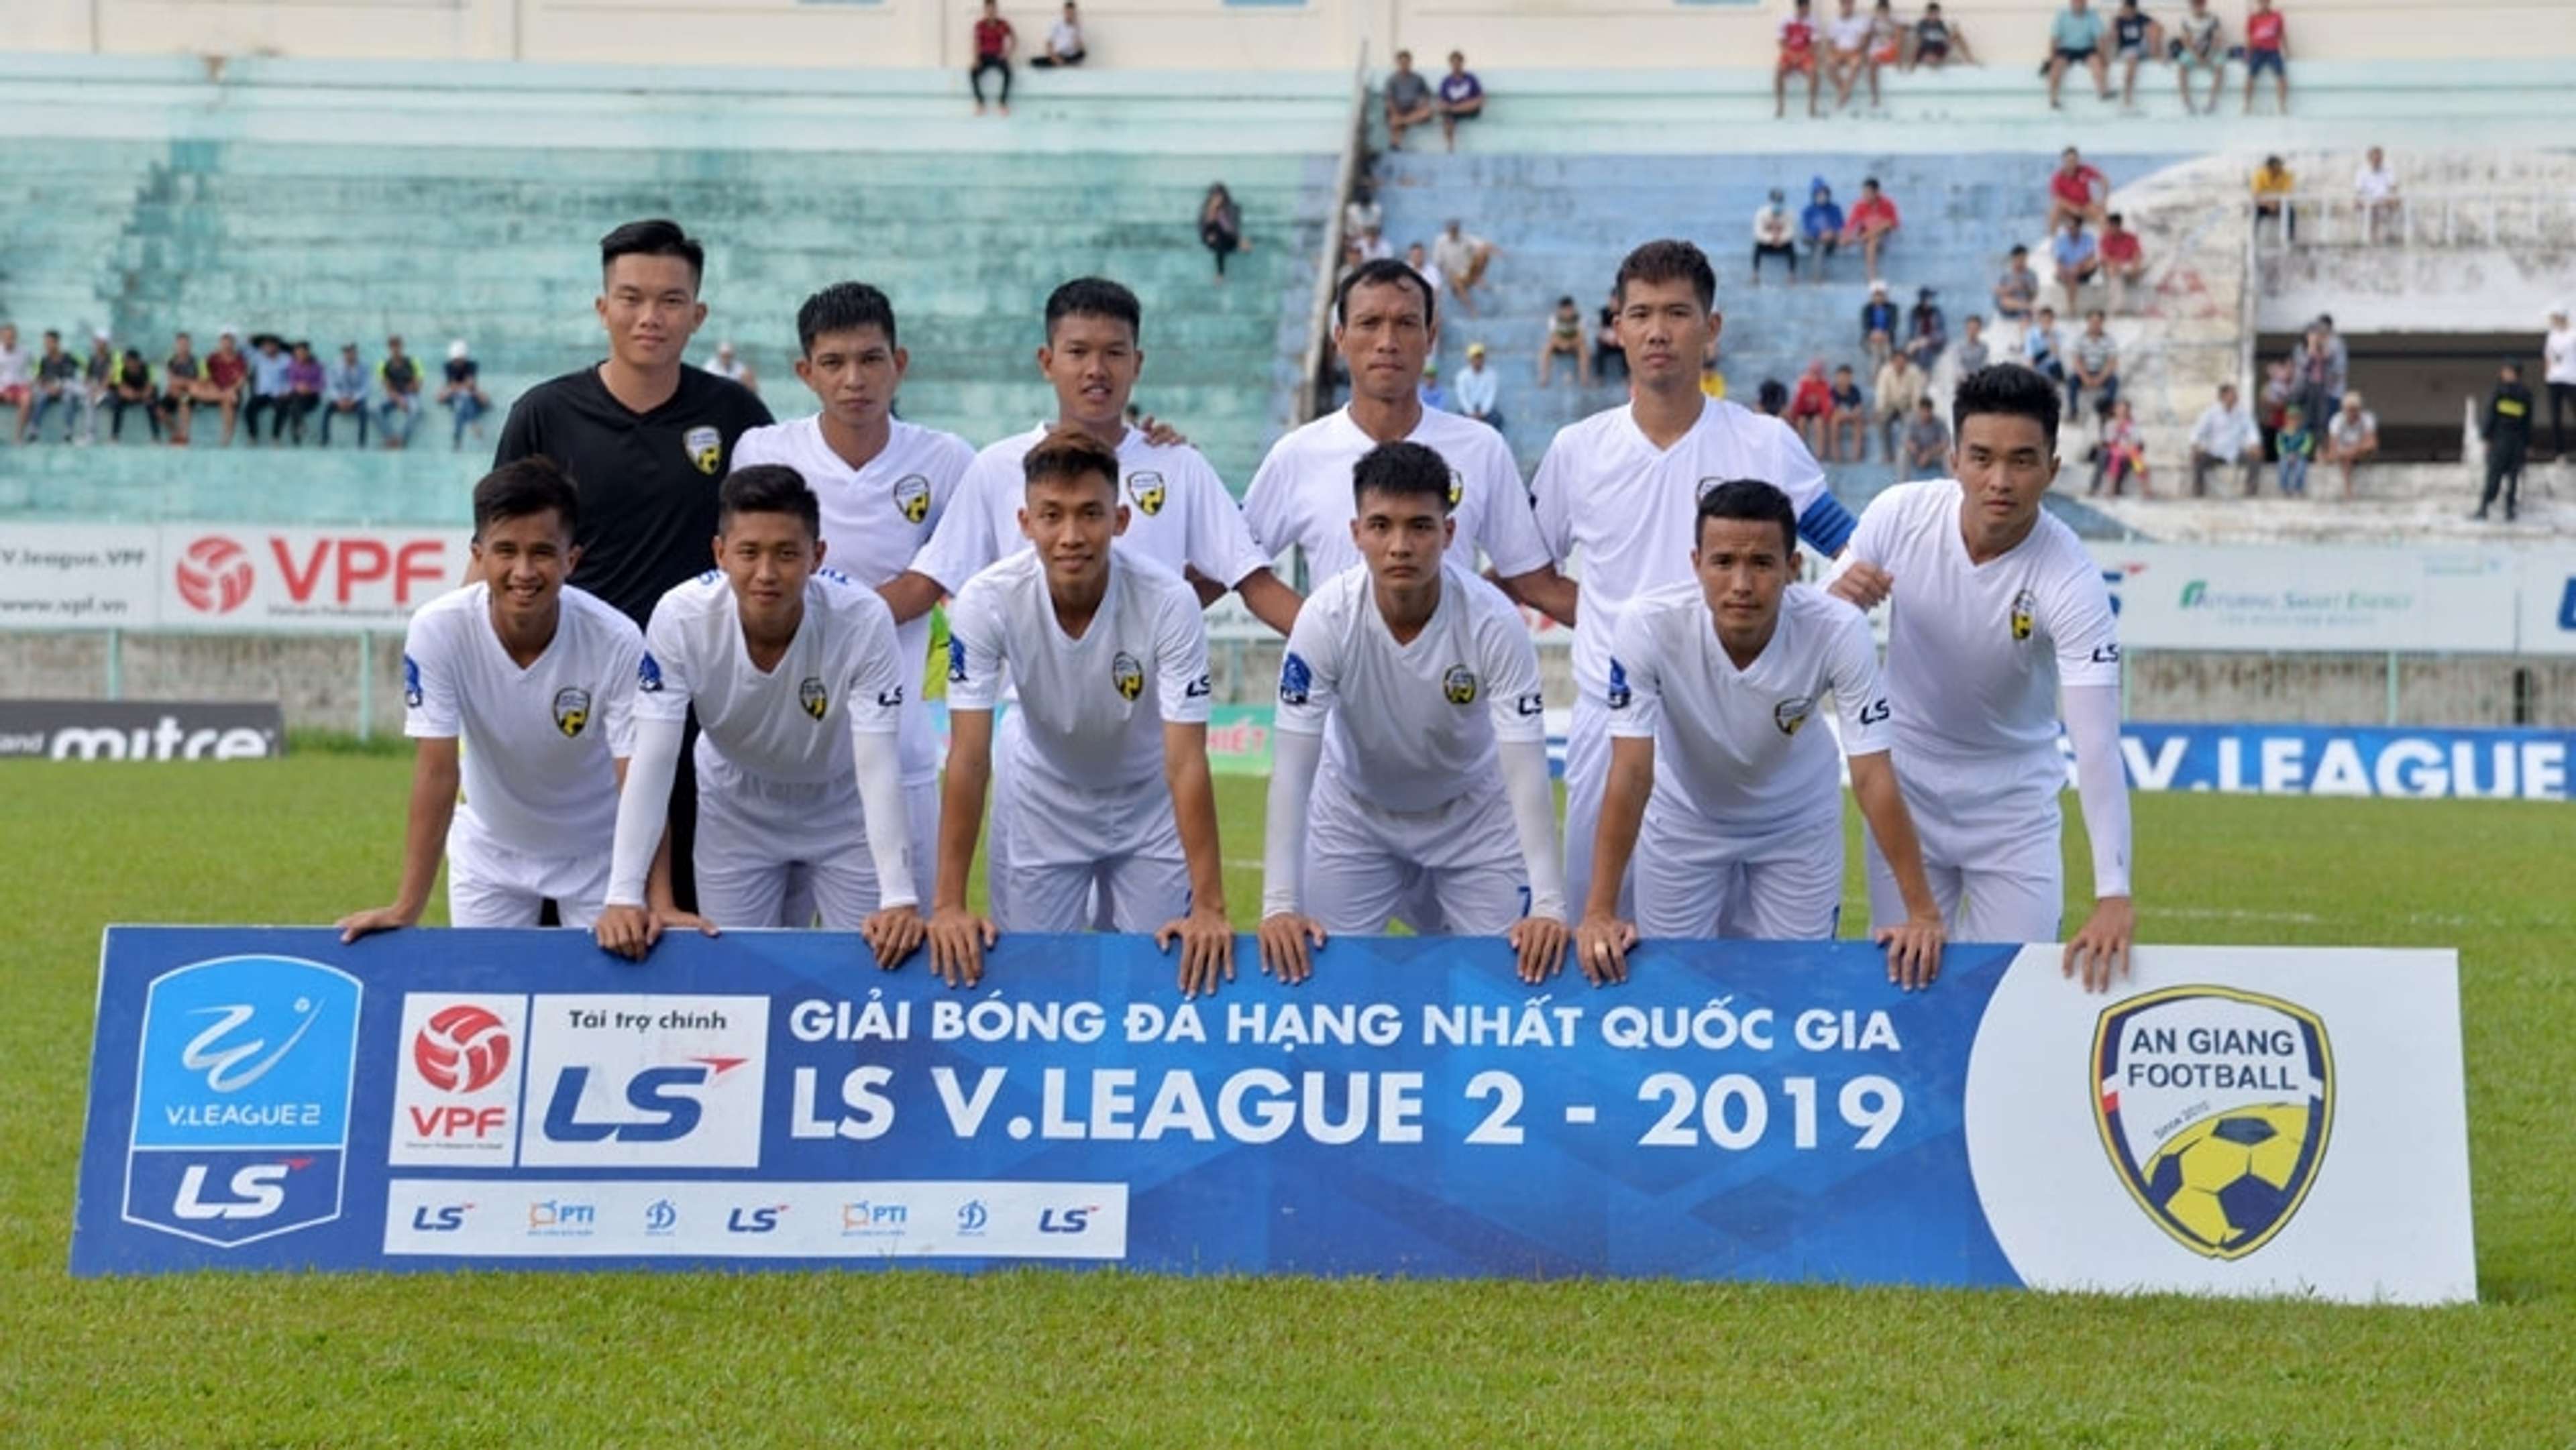 Tran Dinh Kha An Giang 2019 V.League 2